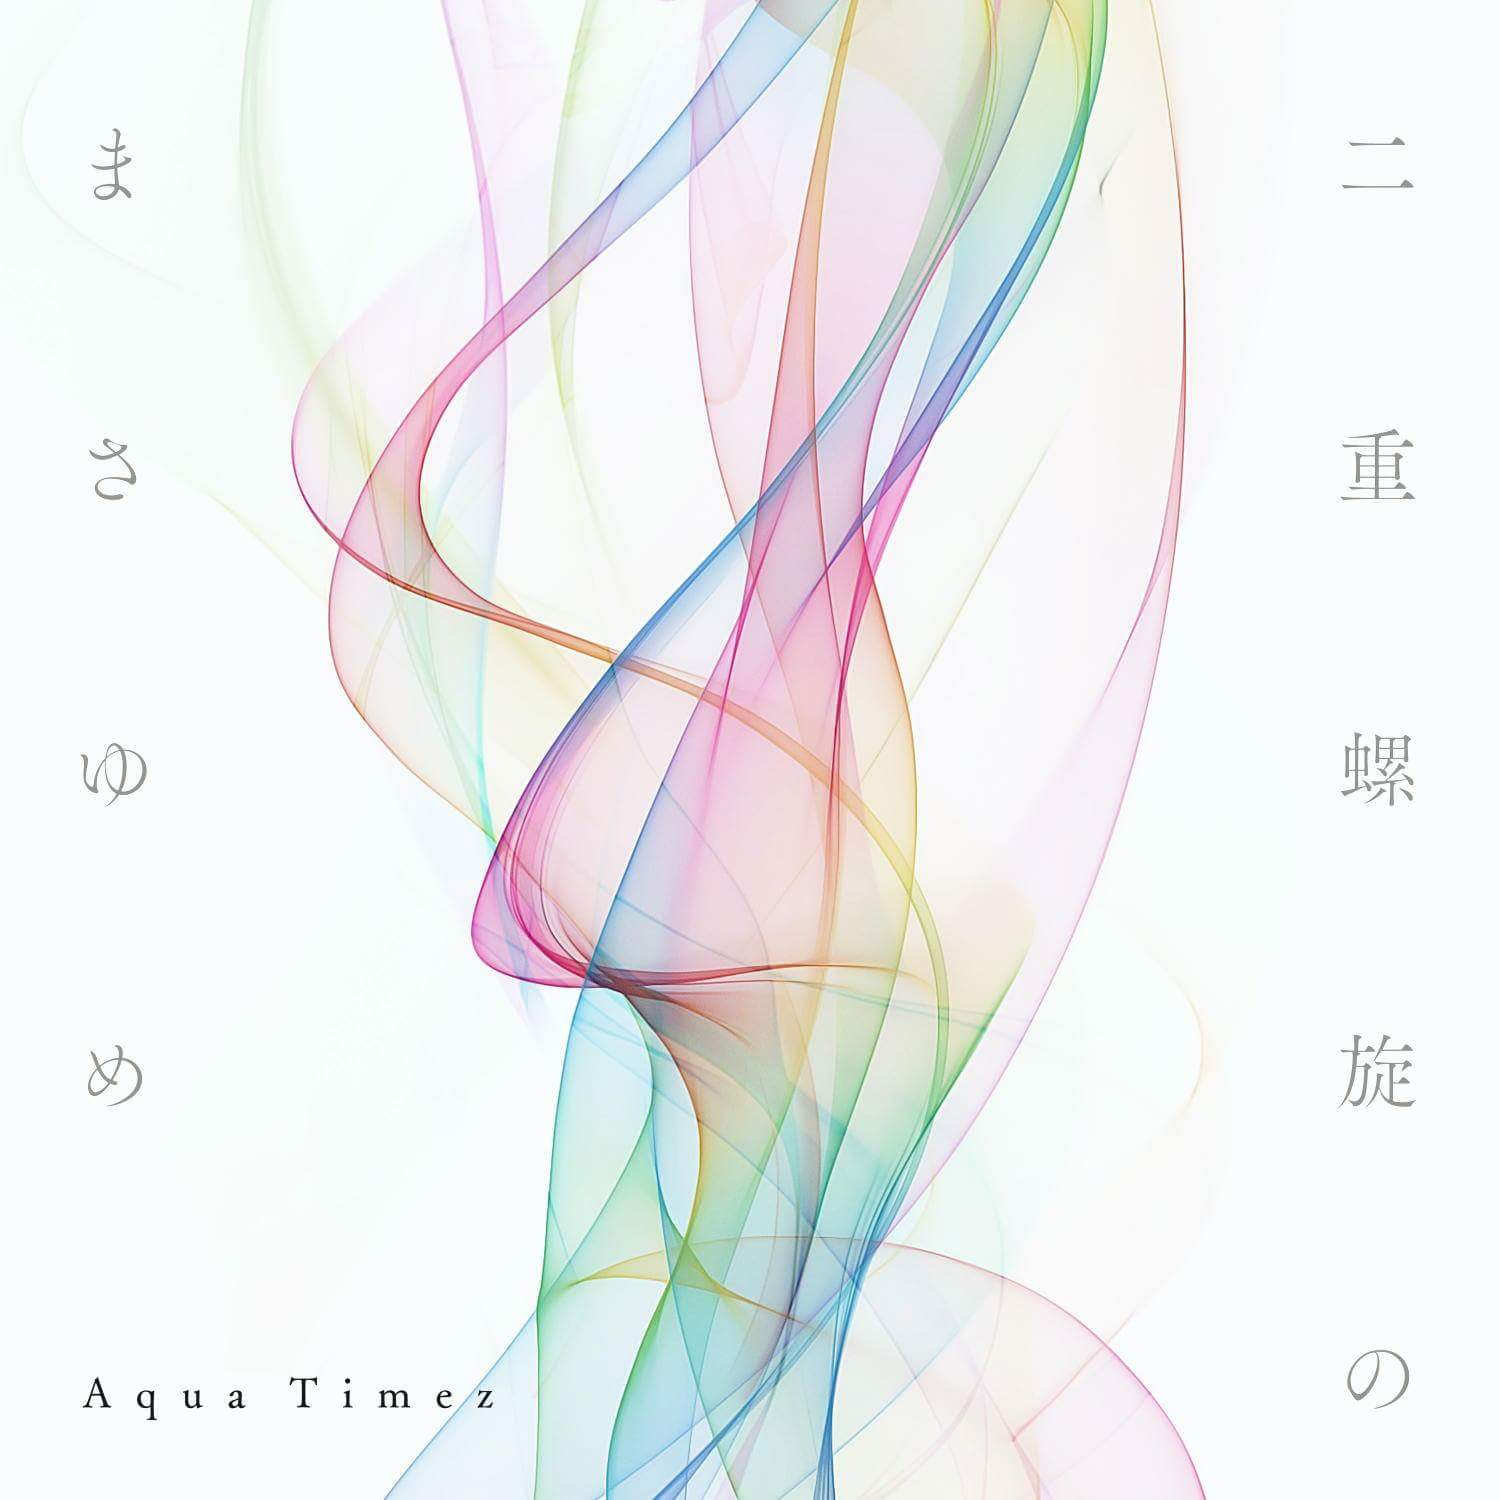 aqua timez news release new album nijurasen no masayume